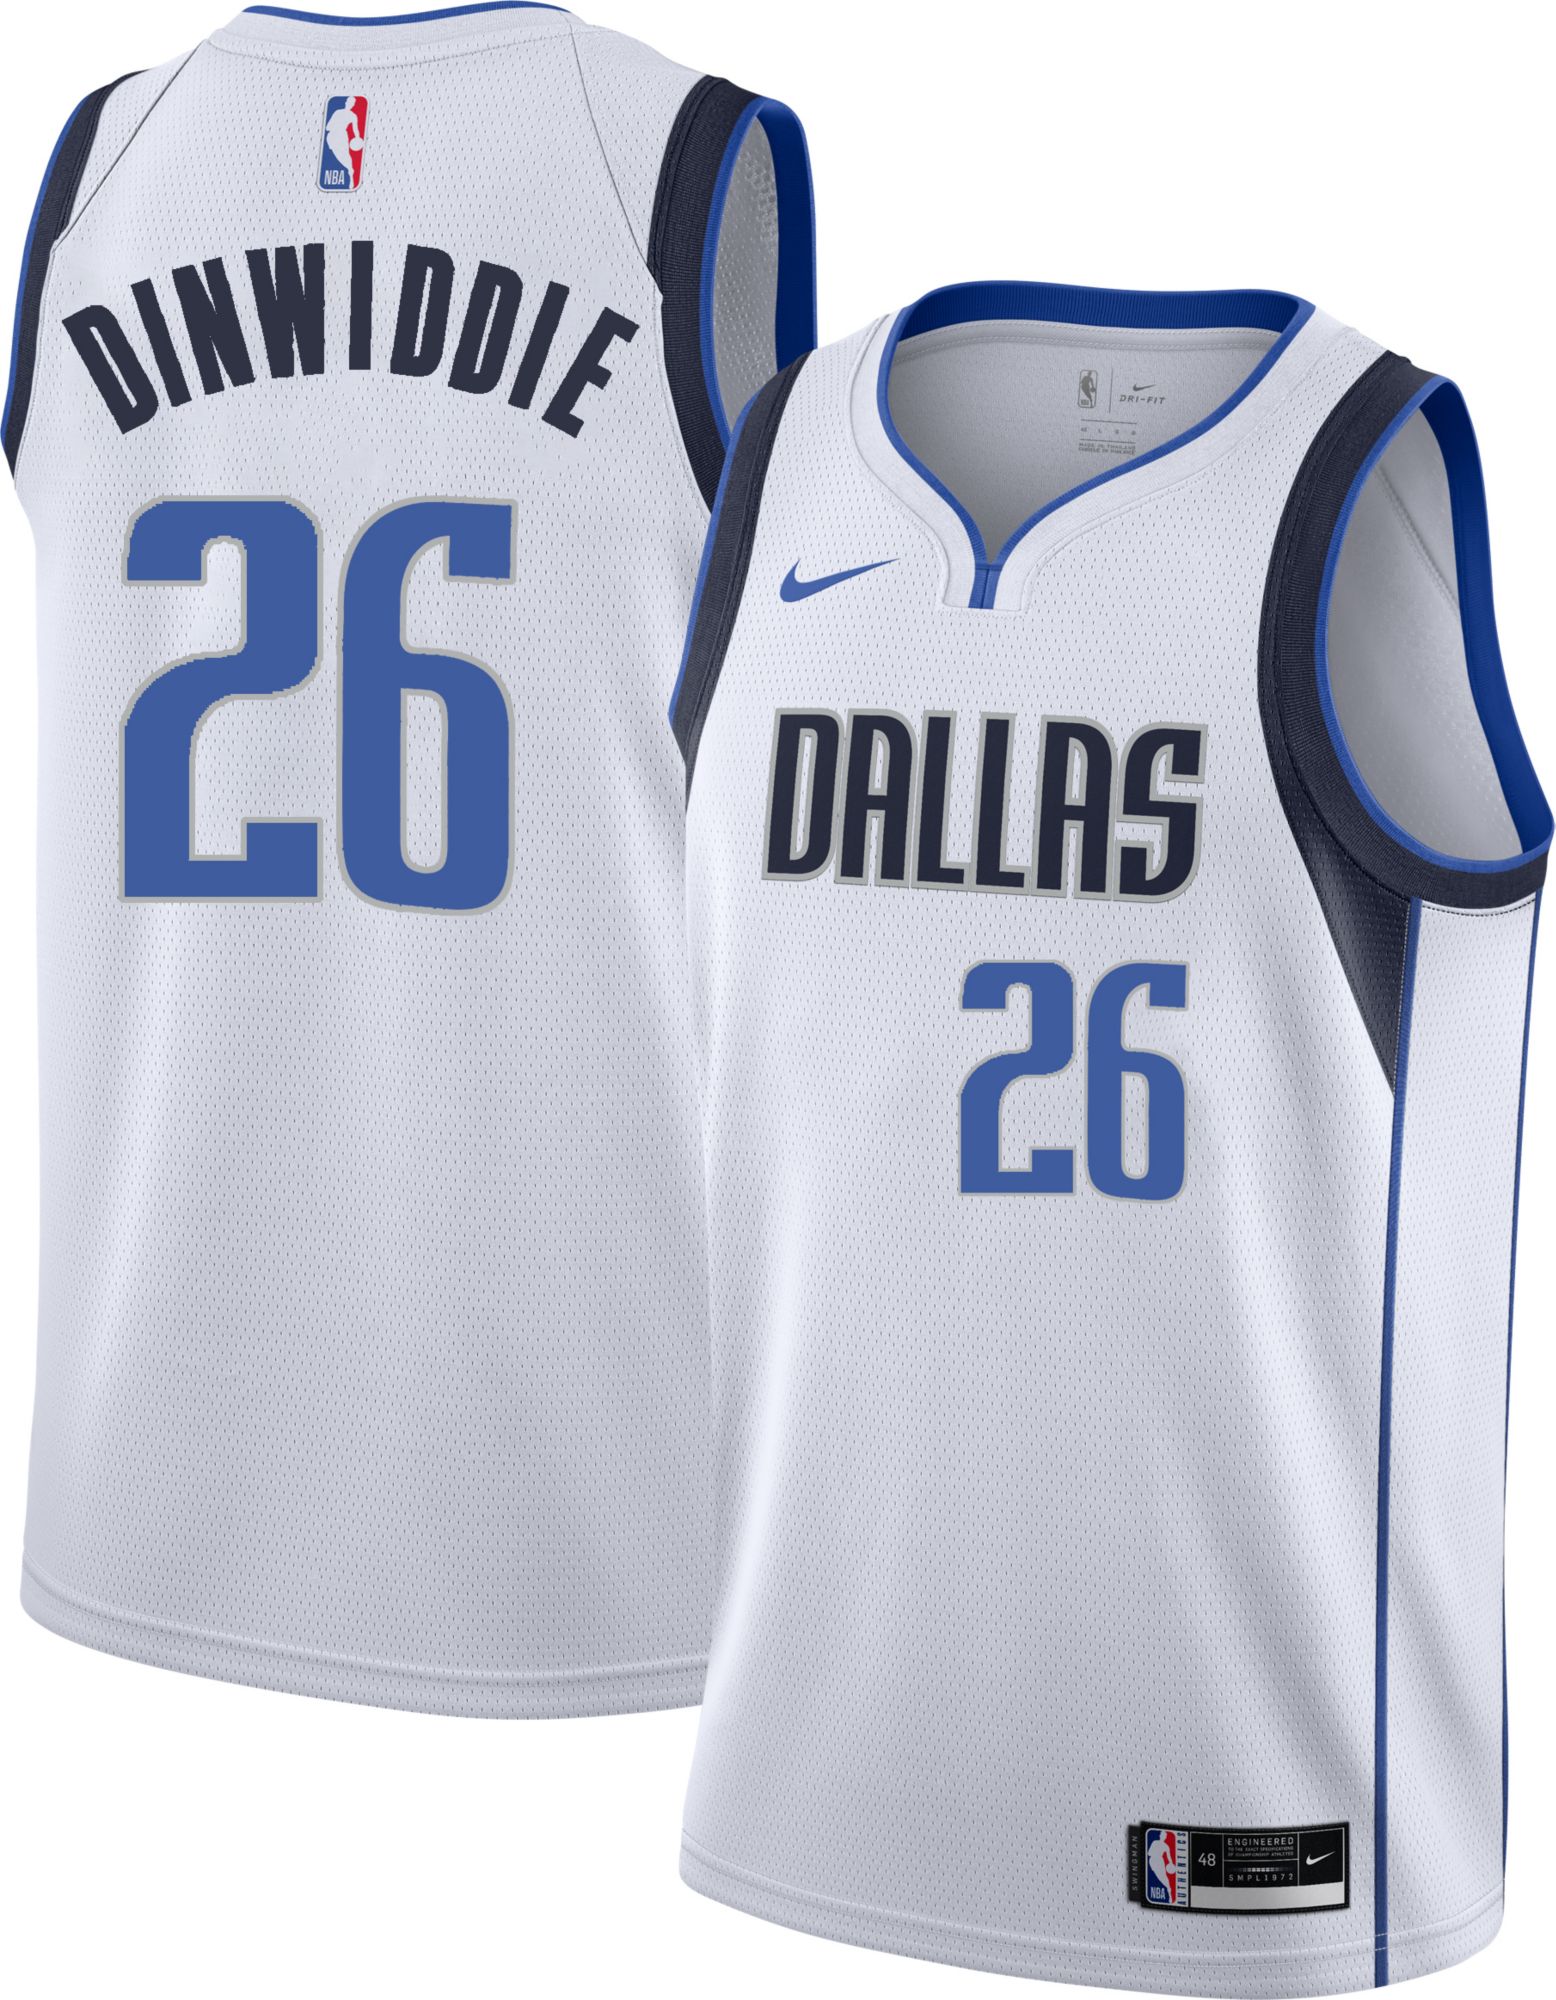 Nike / Youth Dallas Mavericks Spencer Dinwiddie #26 Blue Dri-FIT Swingman  Jersey